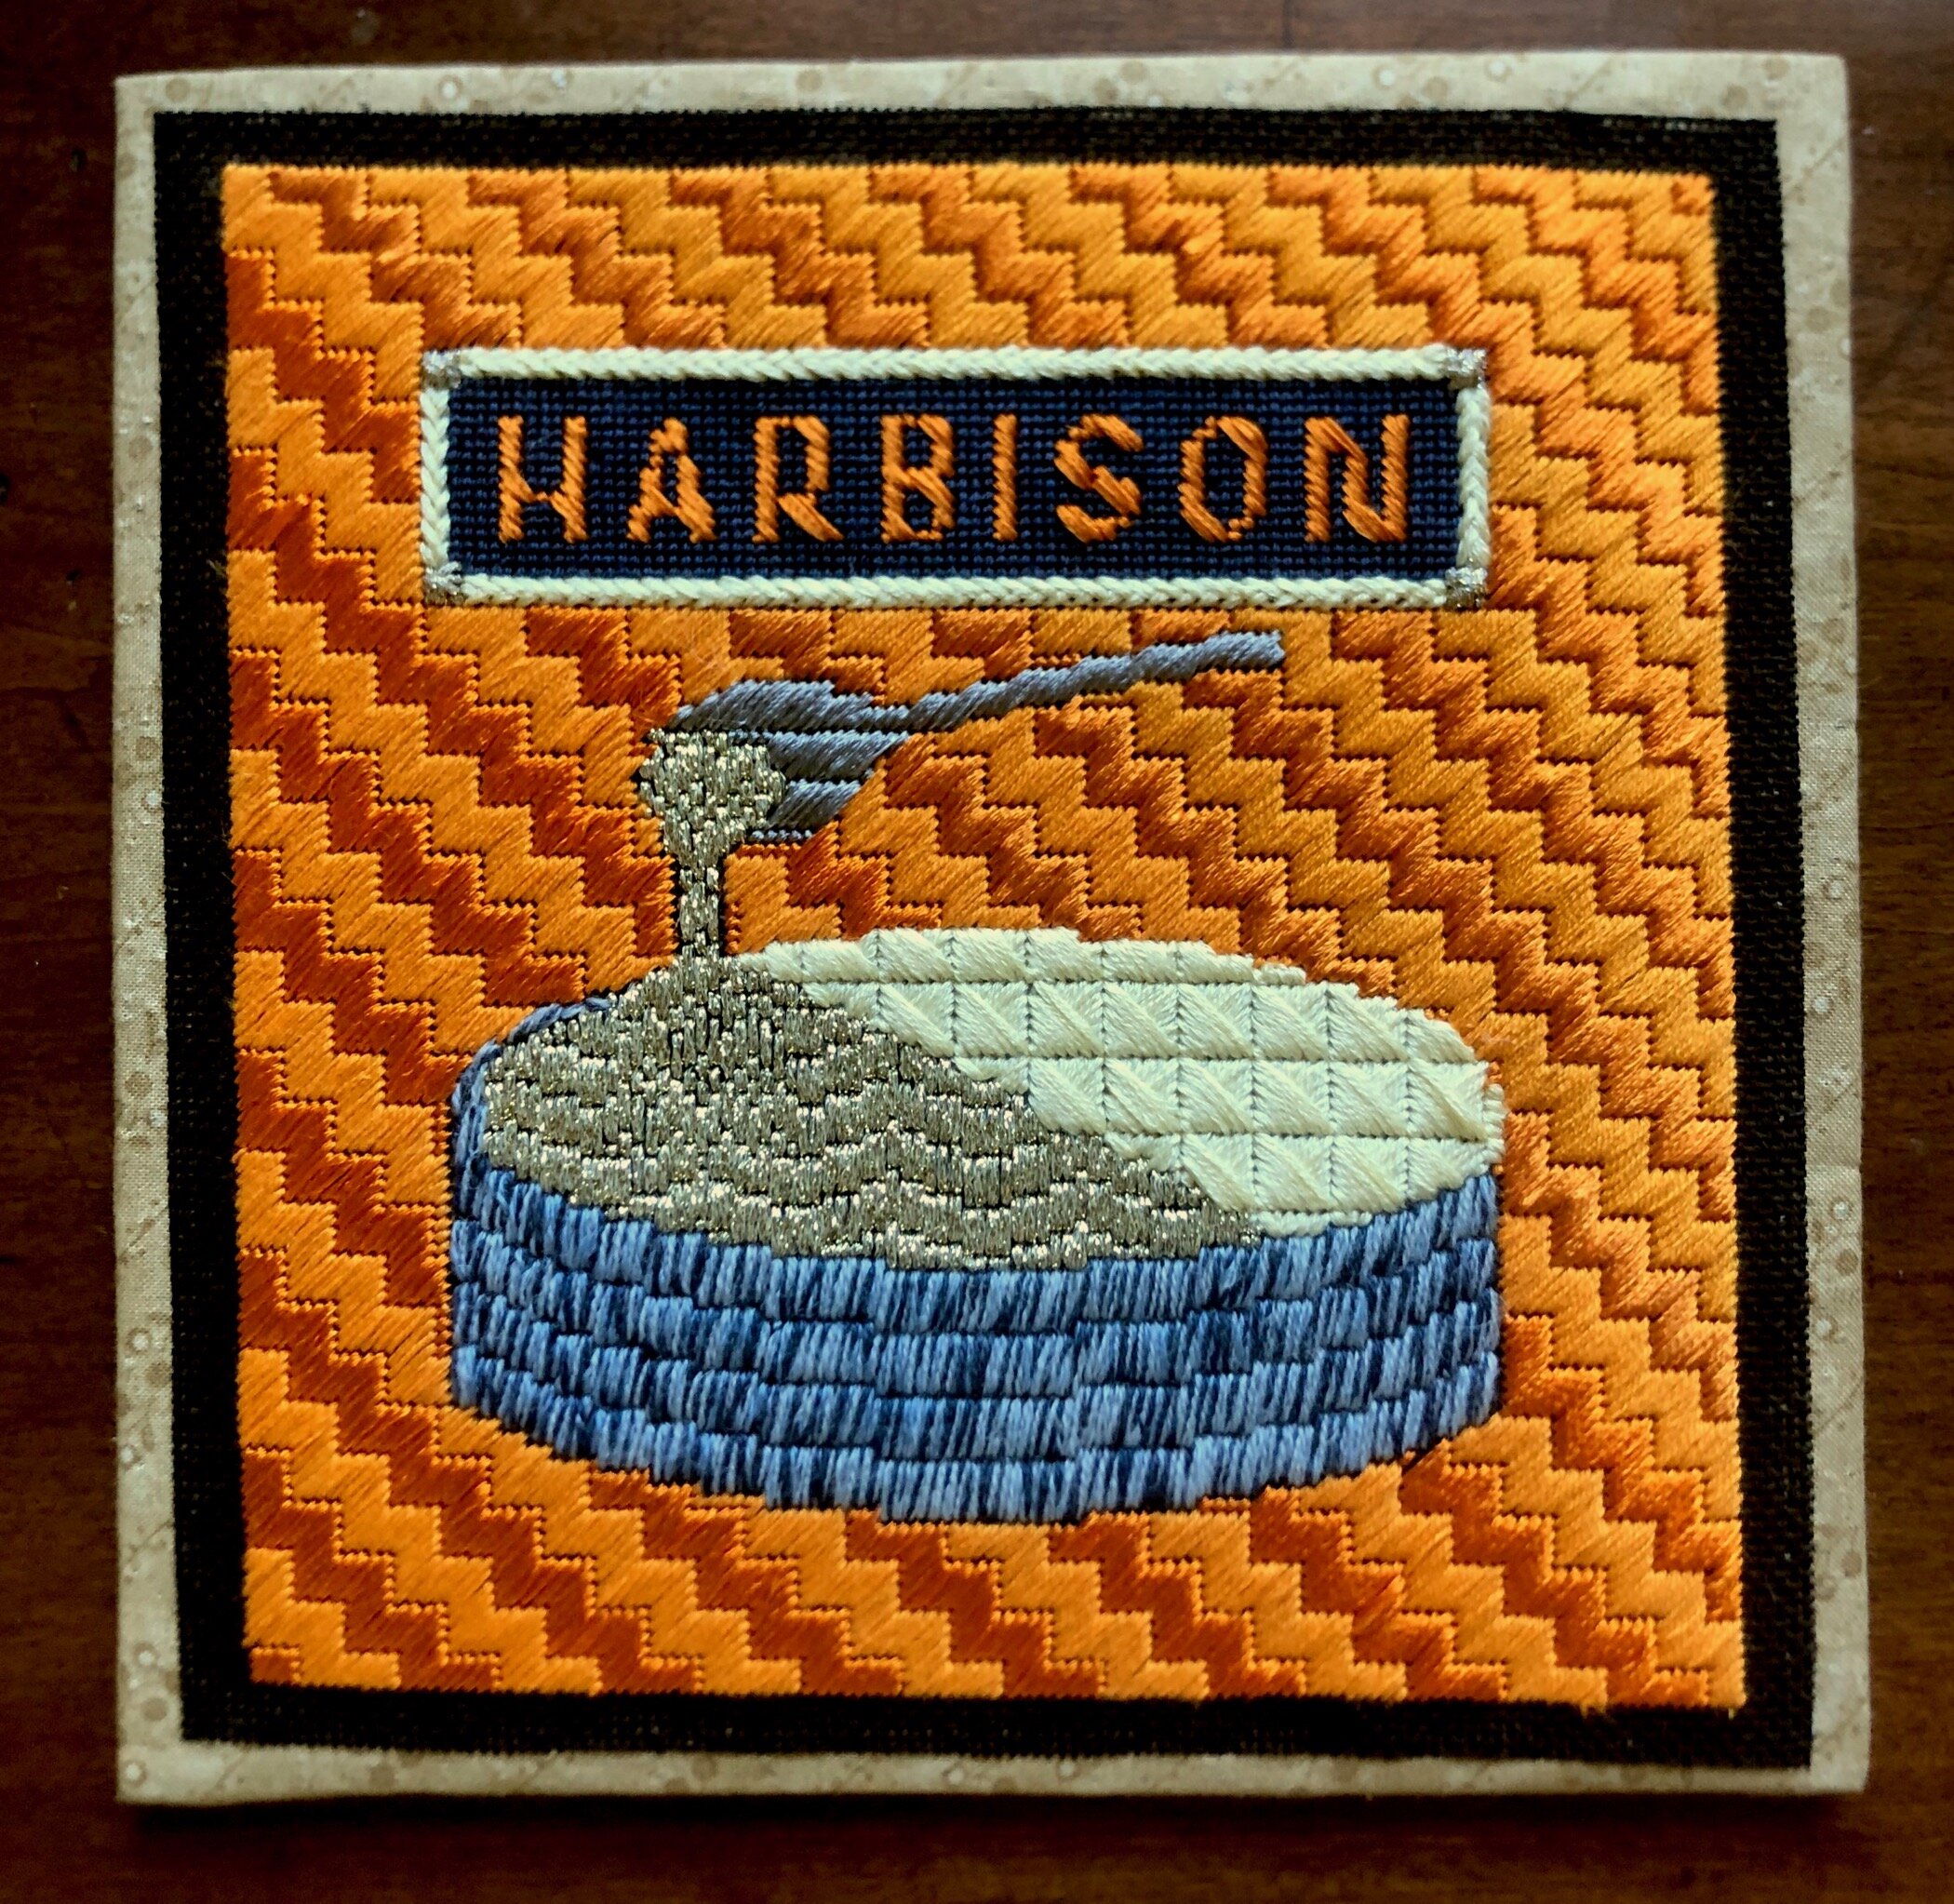   Harbison,  2020. 6.75” x 6.75”. Various fibers on needlepoint canvas. 